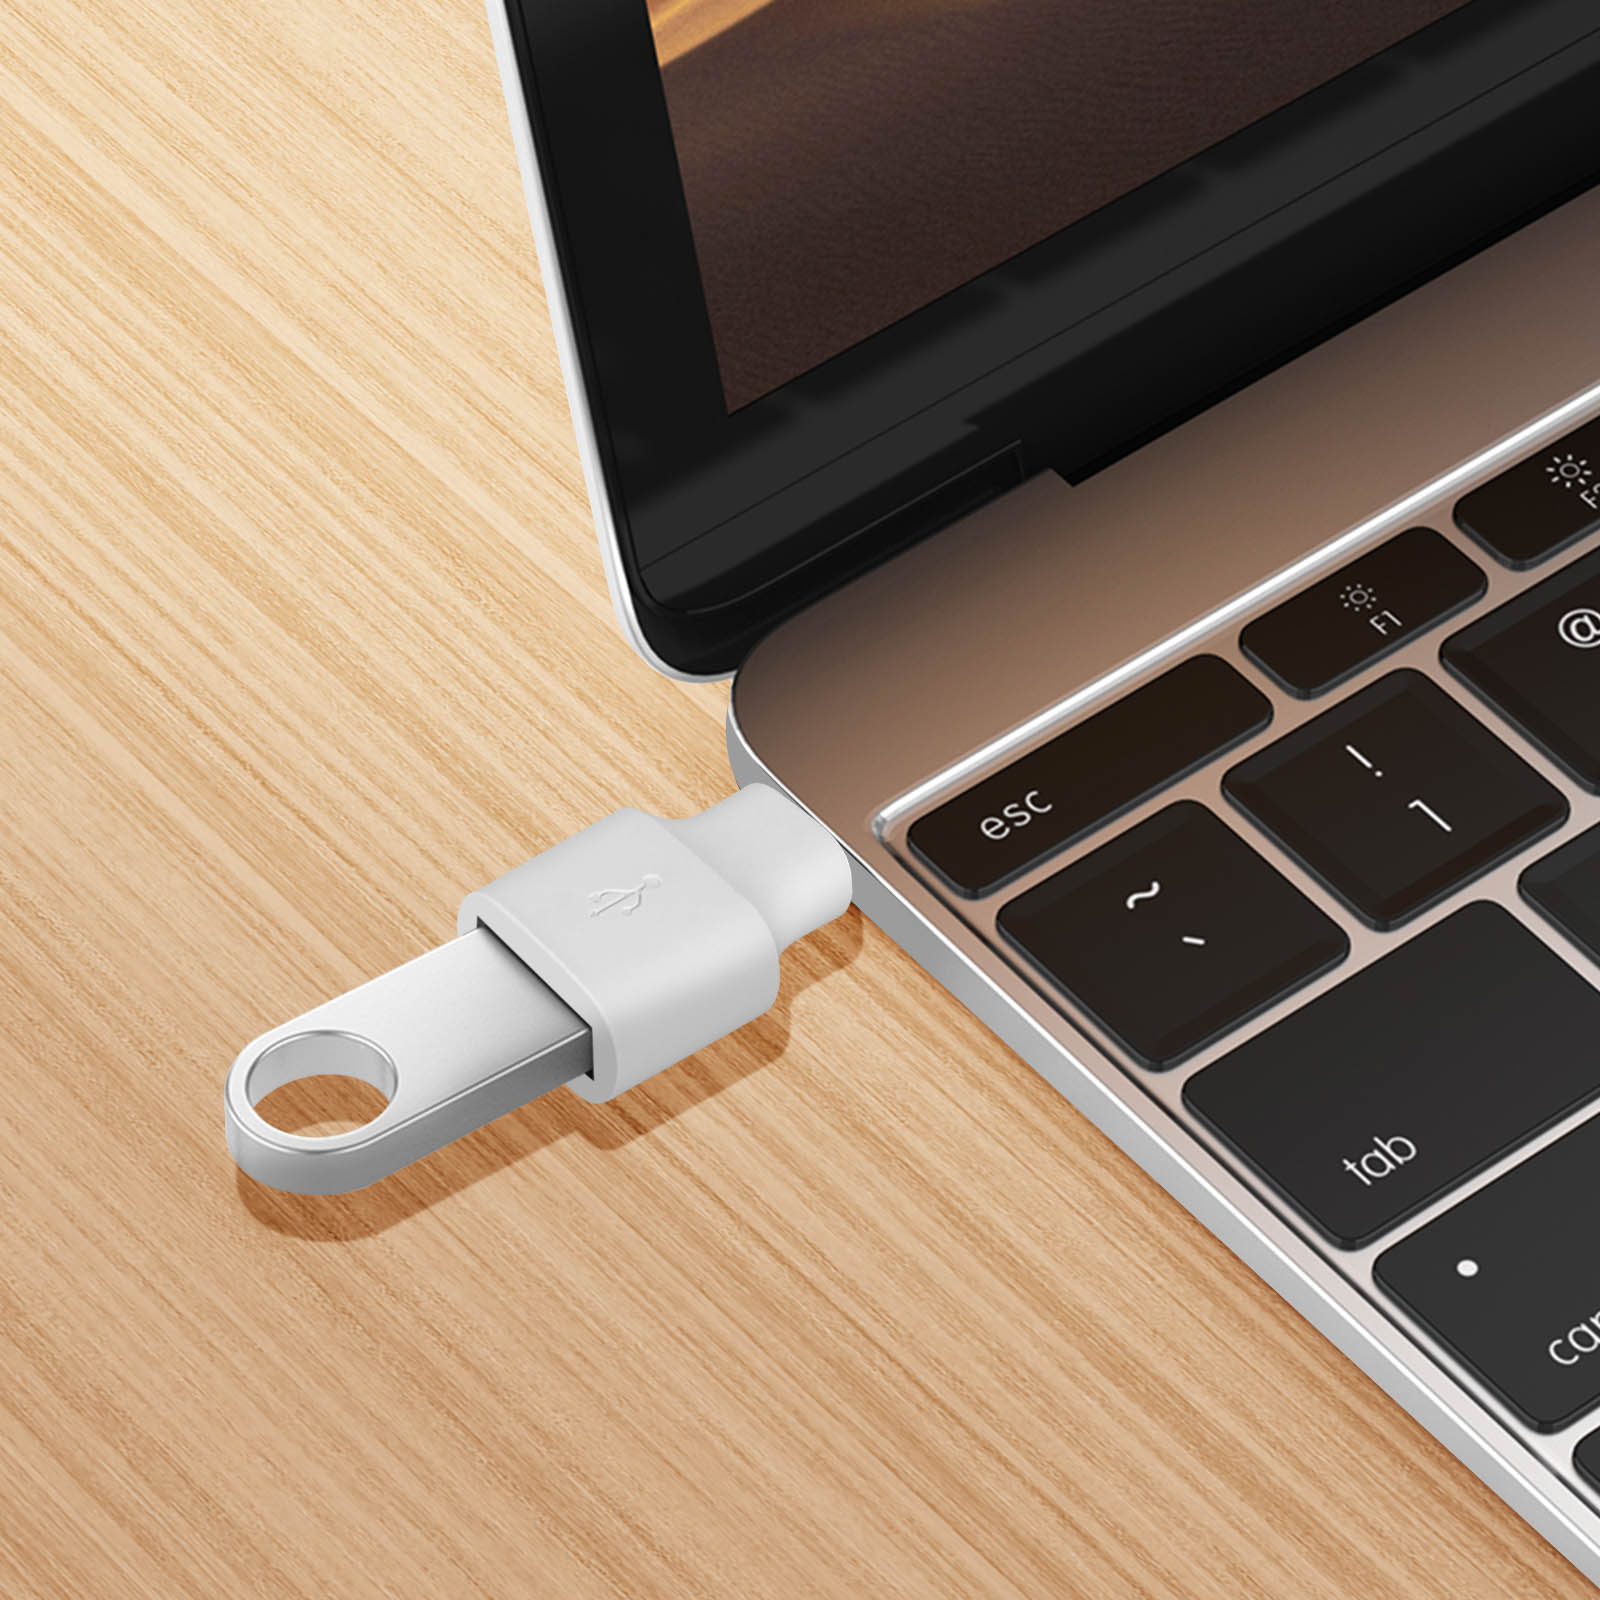 GOOGLE USB Buchse auf Stecker USB-Adapter USB-C Weiß Google